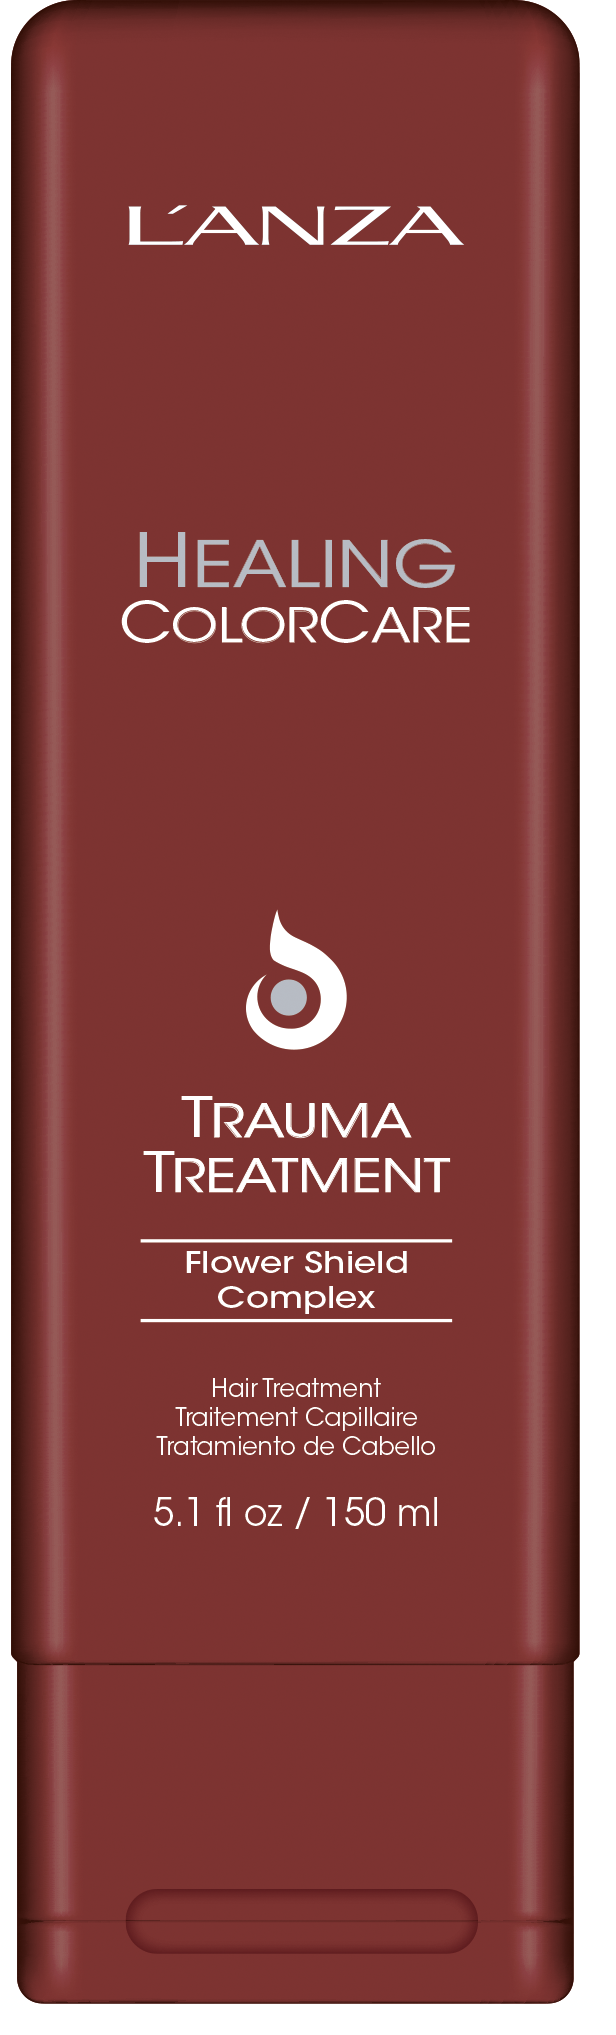 L'ANZA Healing Colorcare Trauma Treatment